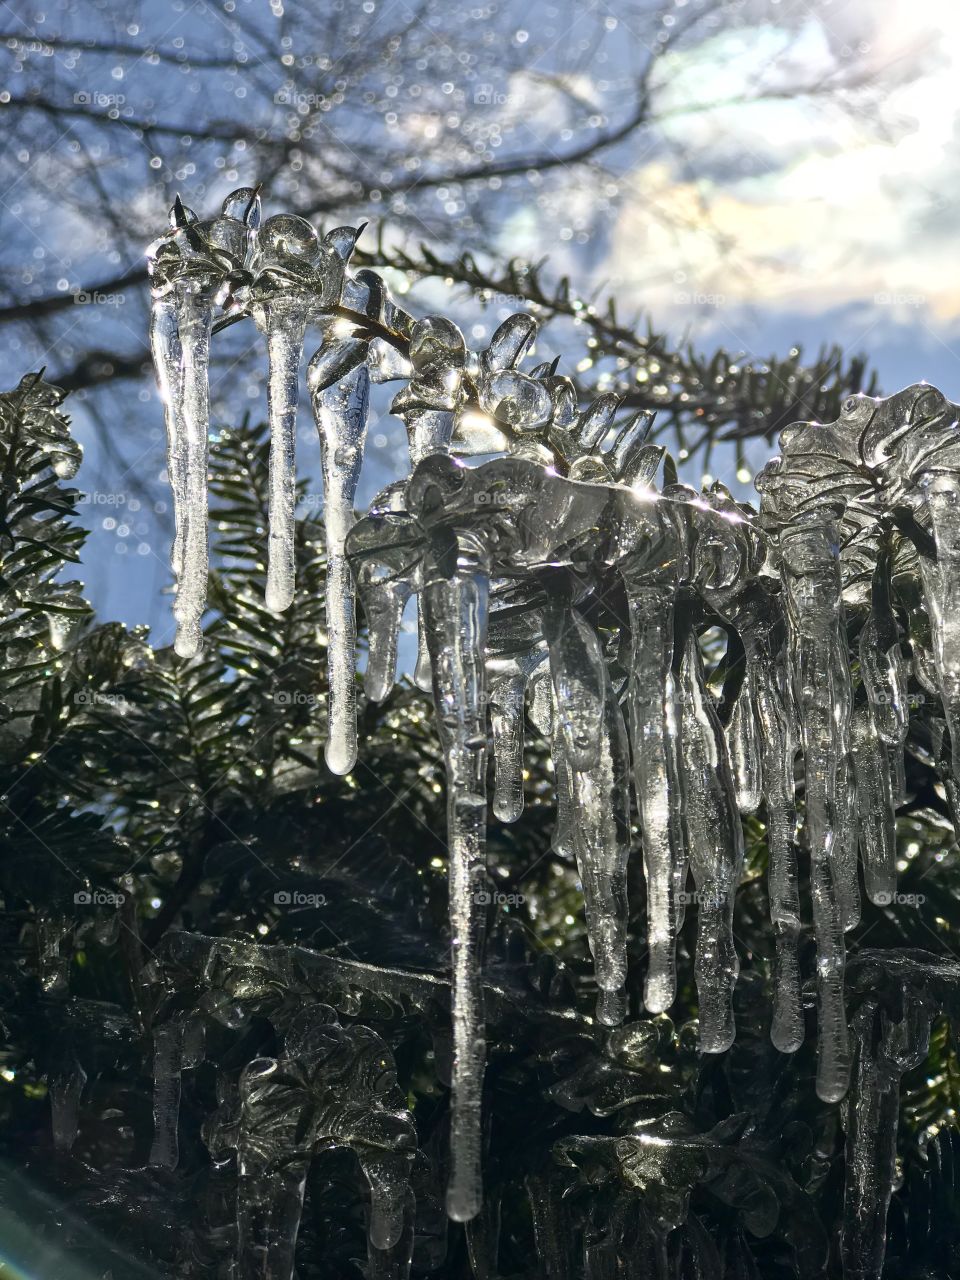 Frozen drips